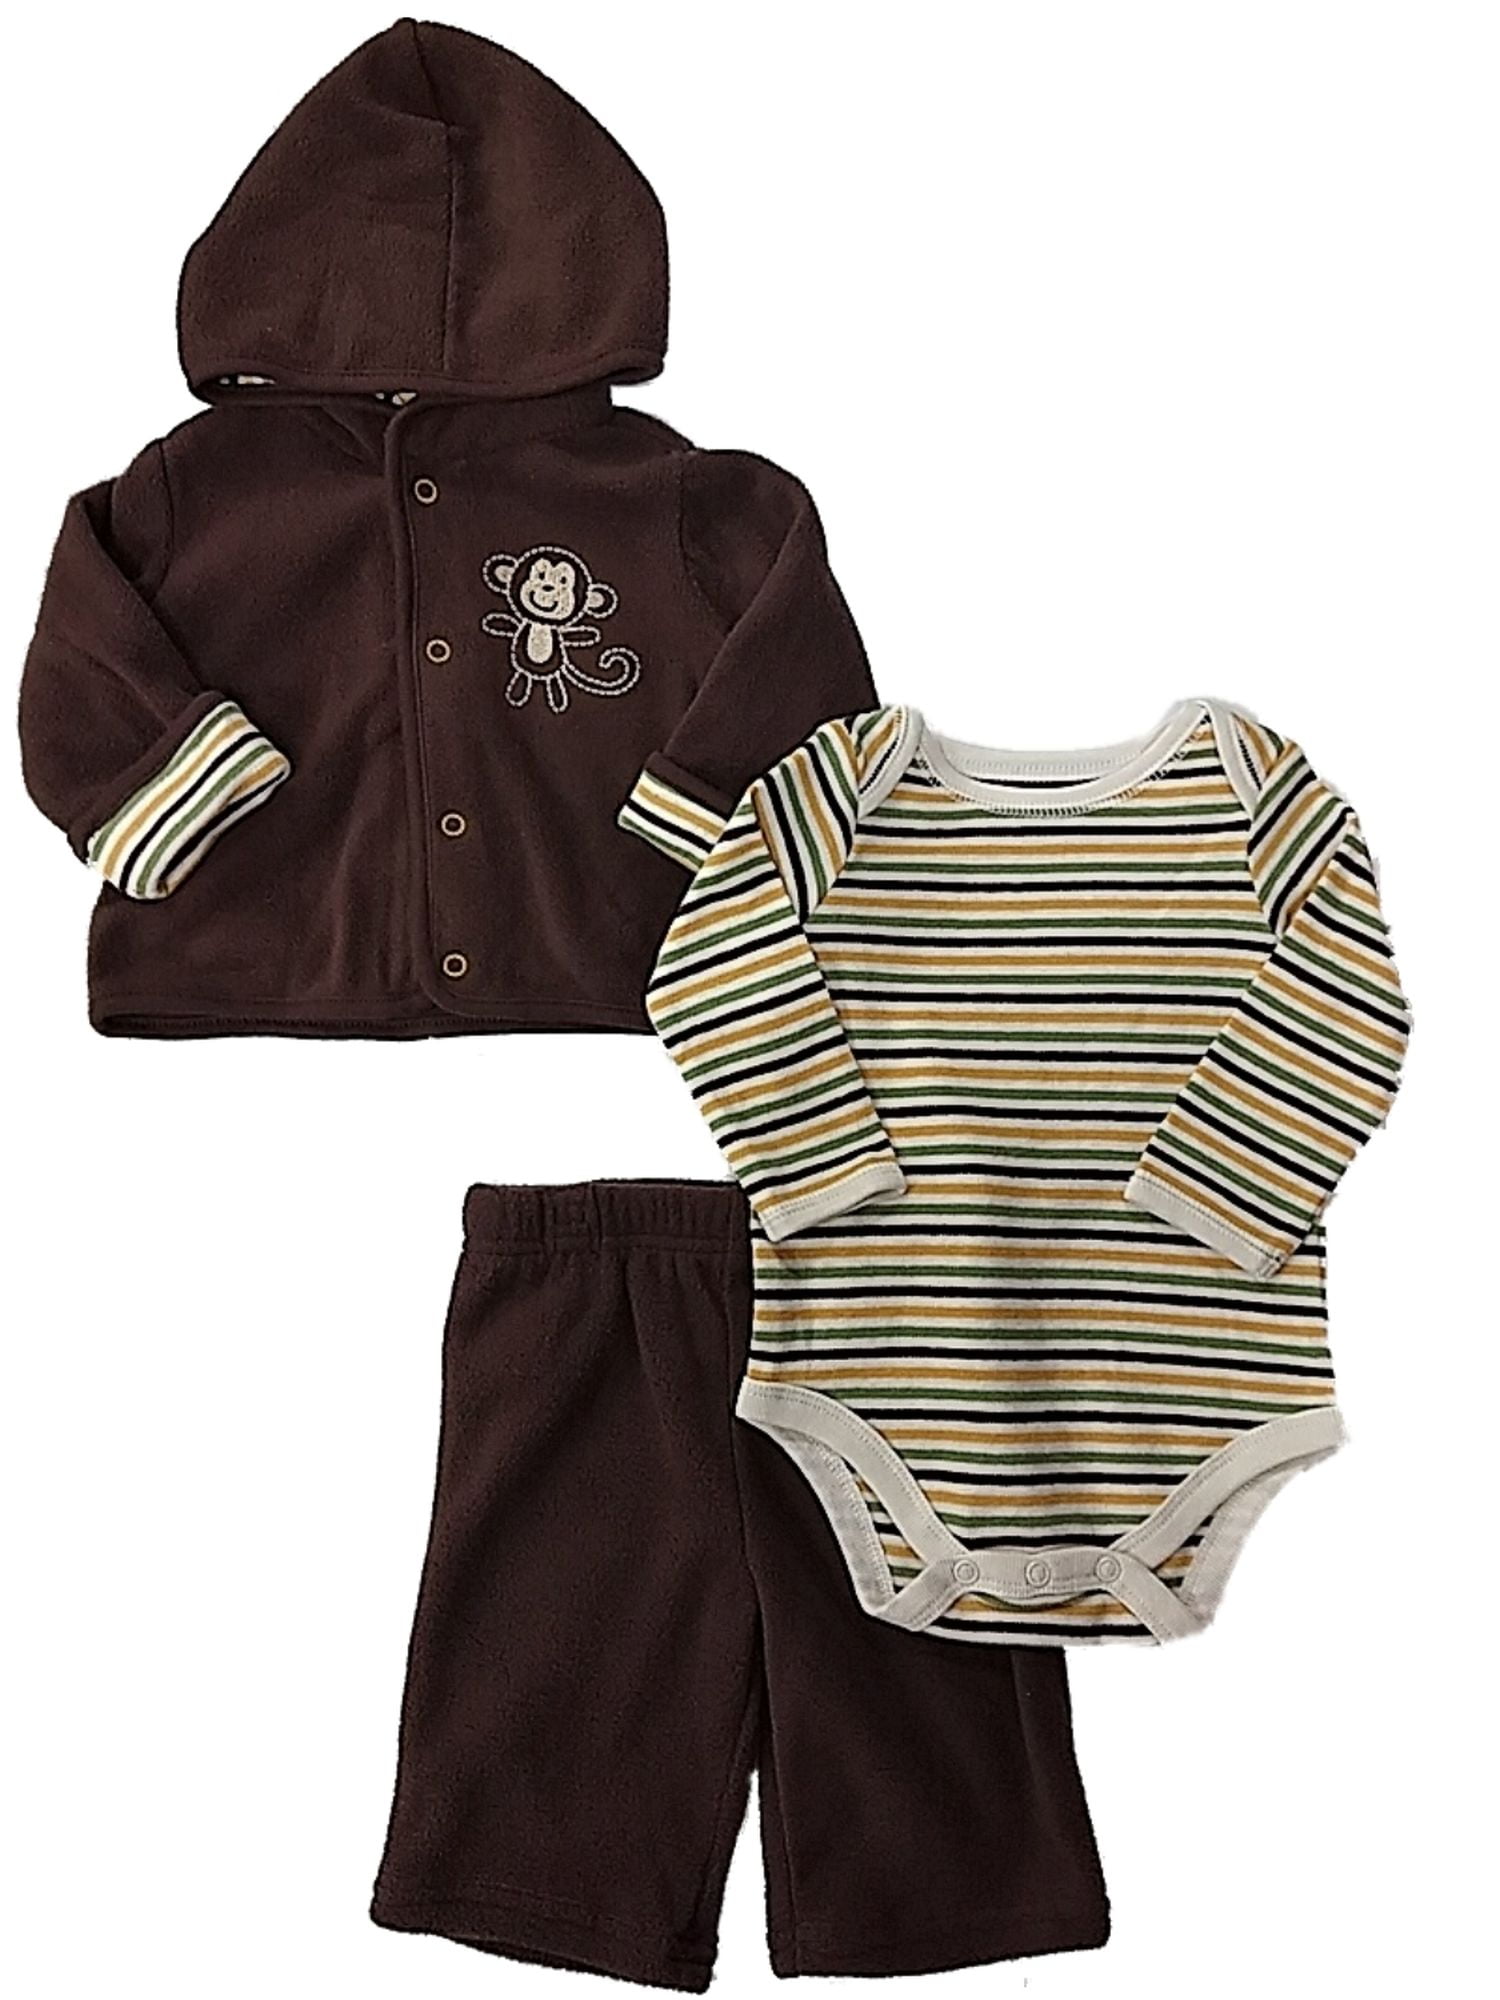 Baby Boy 6 Months Carter's Brown & Beige Fleece Football Pocket Romper Outfit 